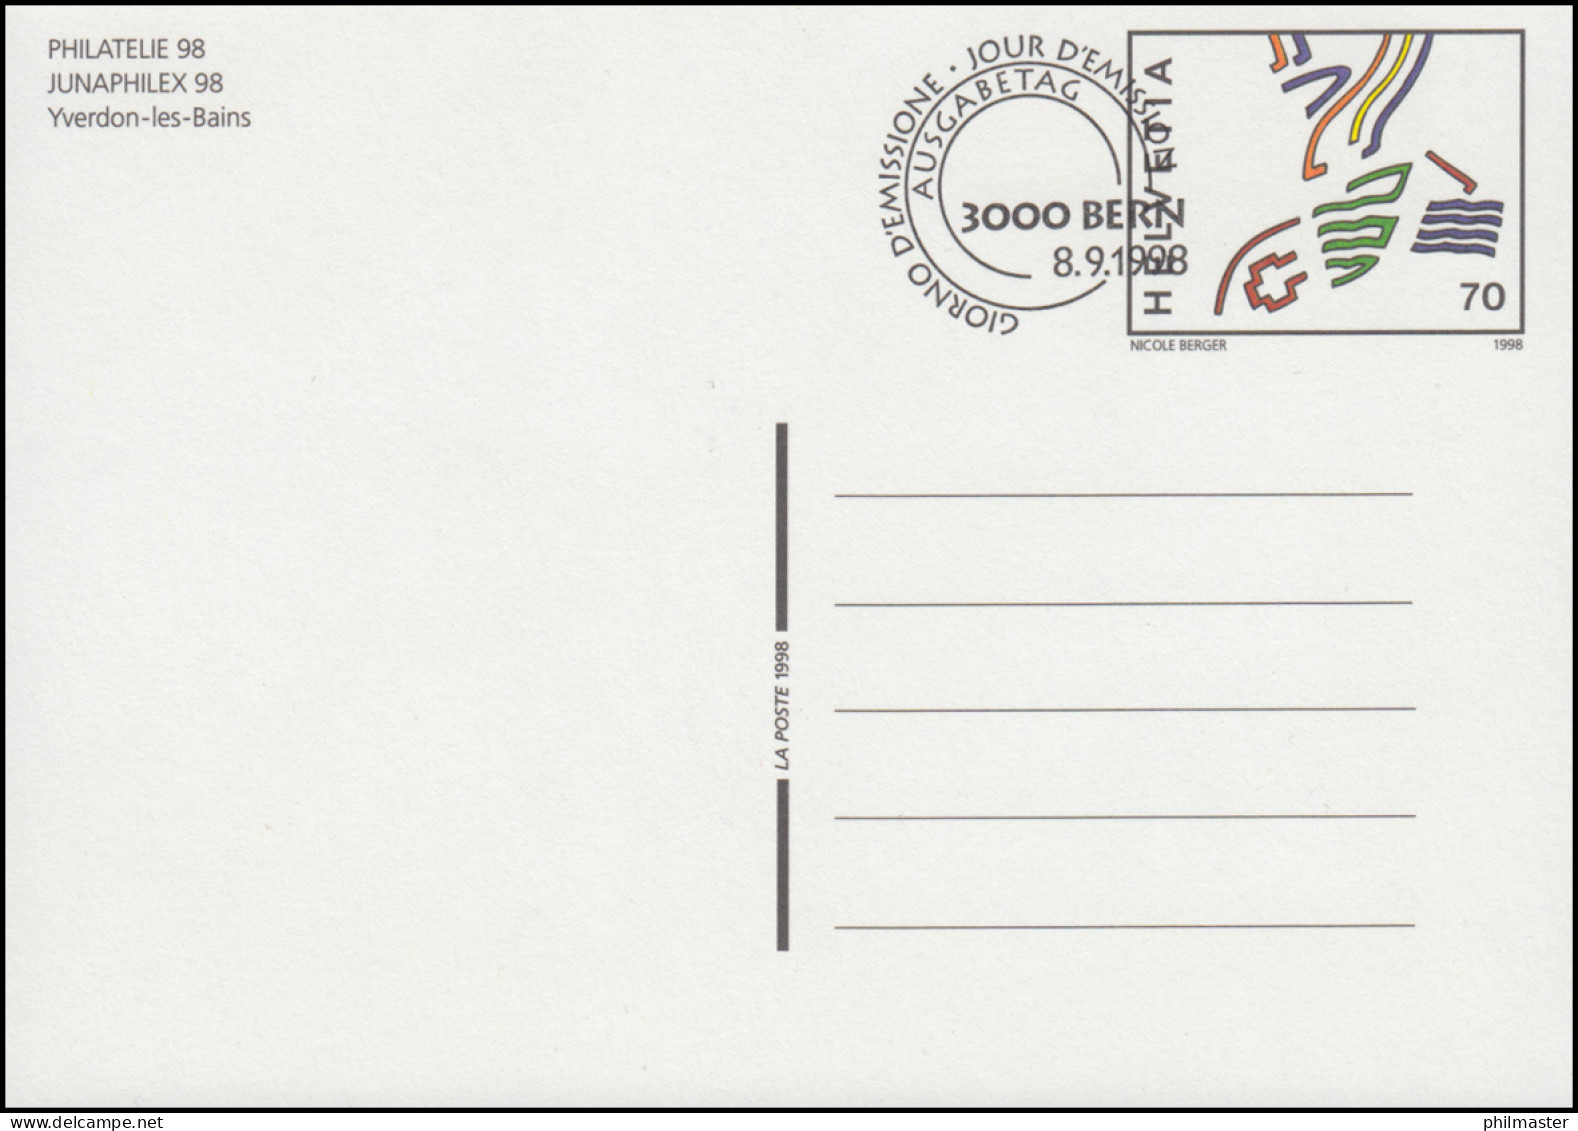 Schweiz Postkarte P 265 PHILATELIA 98 / JUNAPHILEX 98, ESSt Bern 8.9.1998 - Enteros Postales